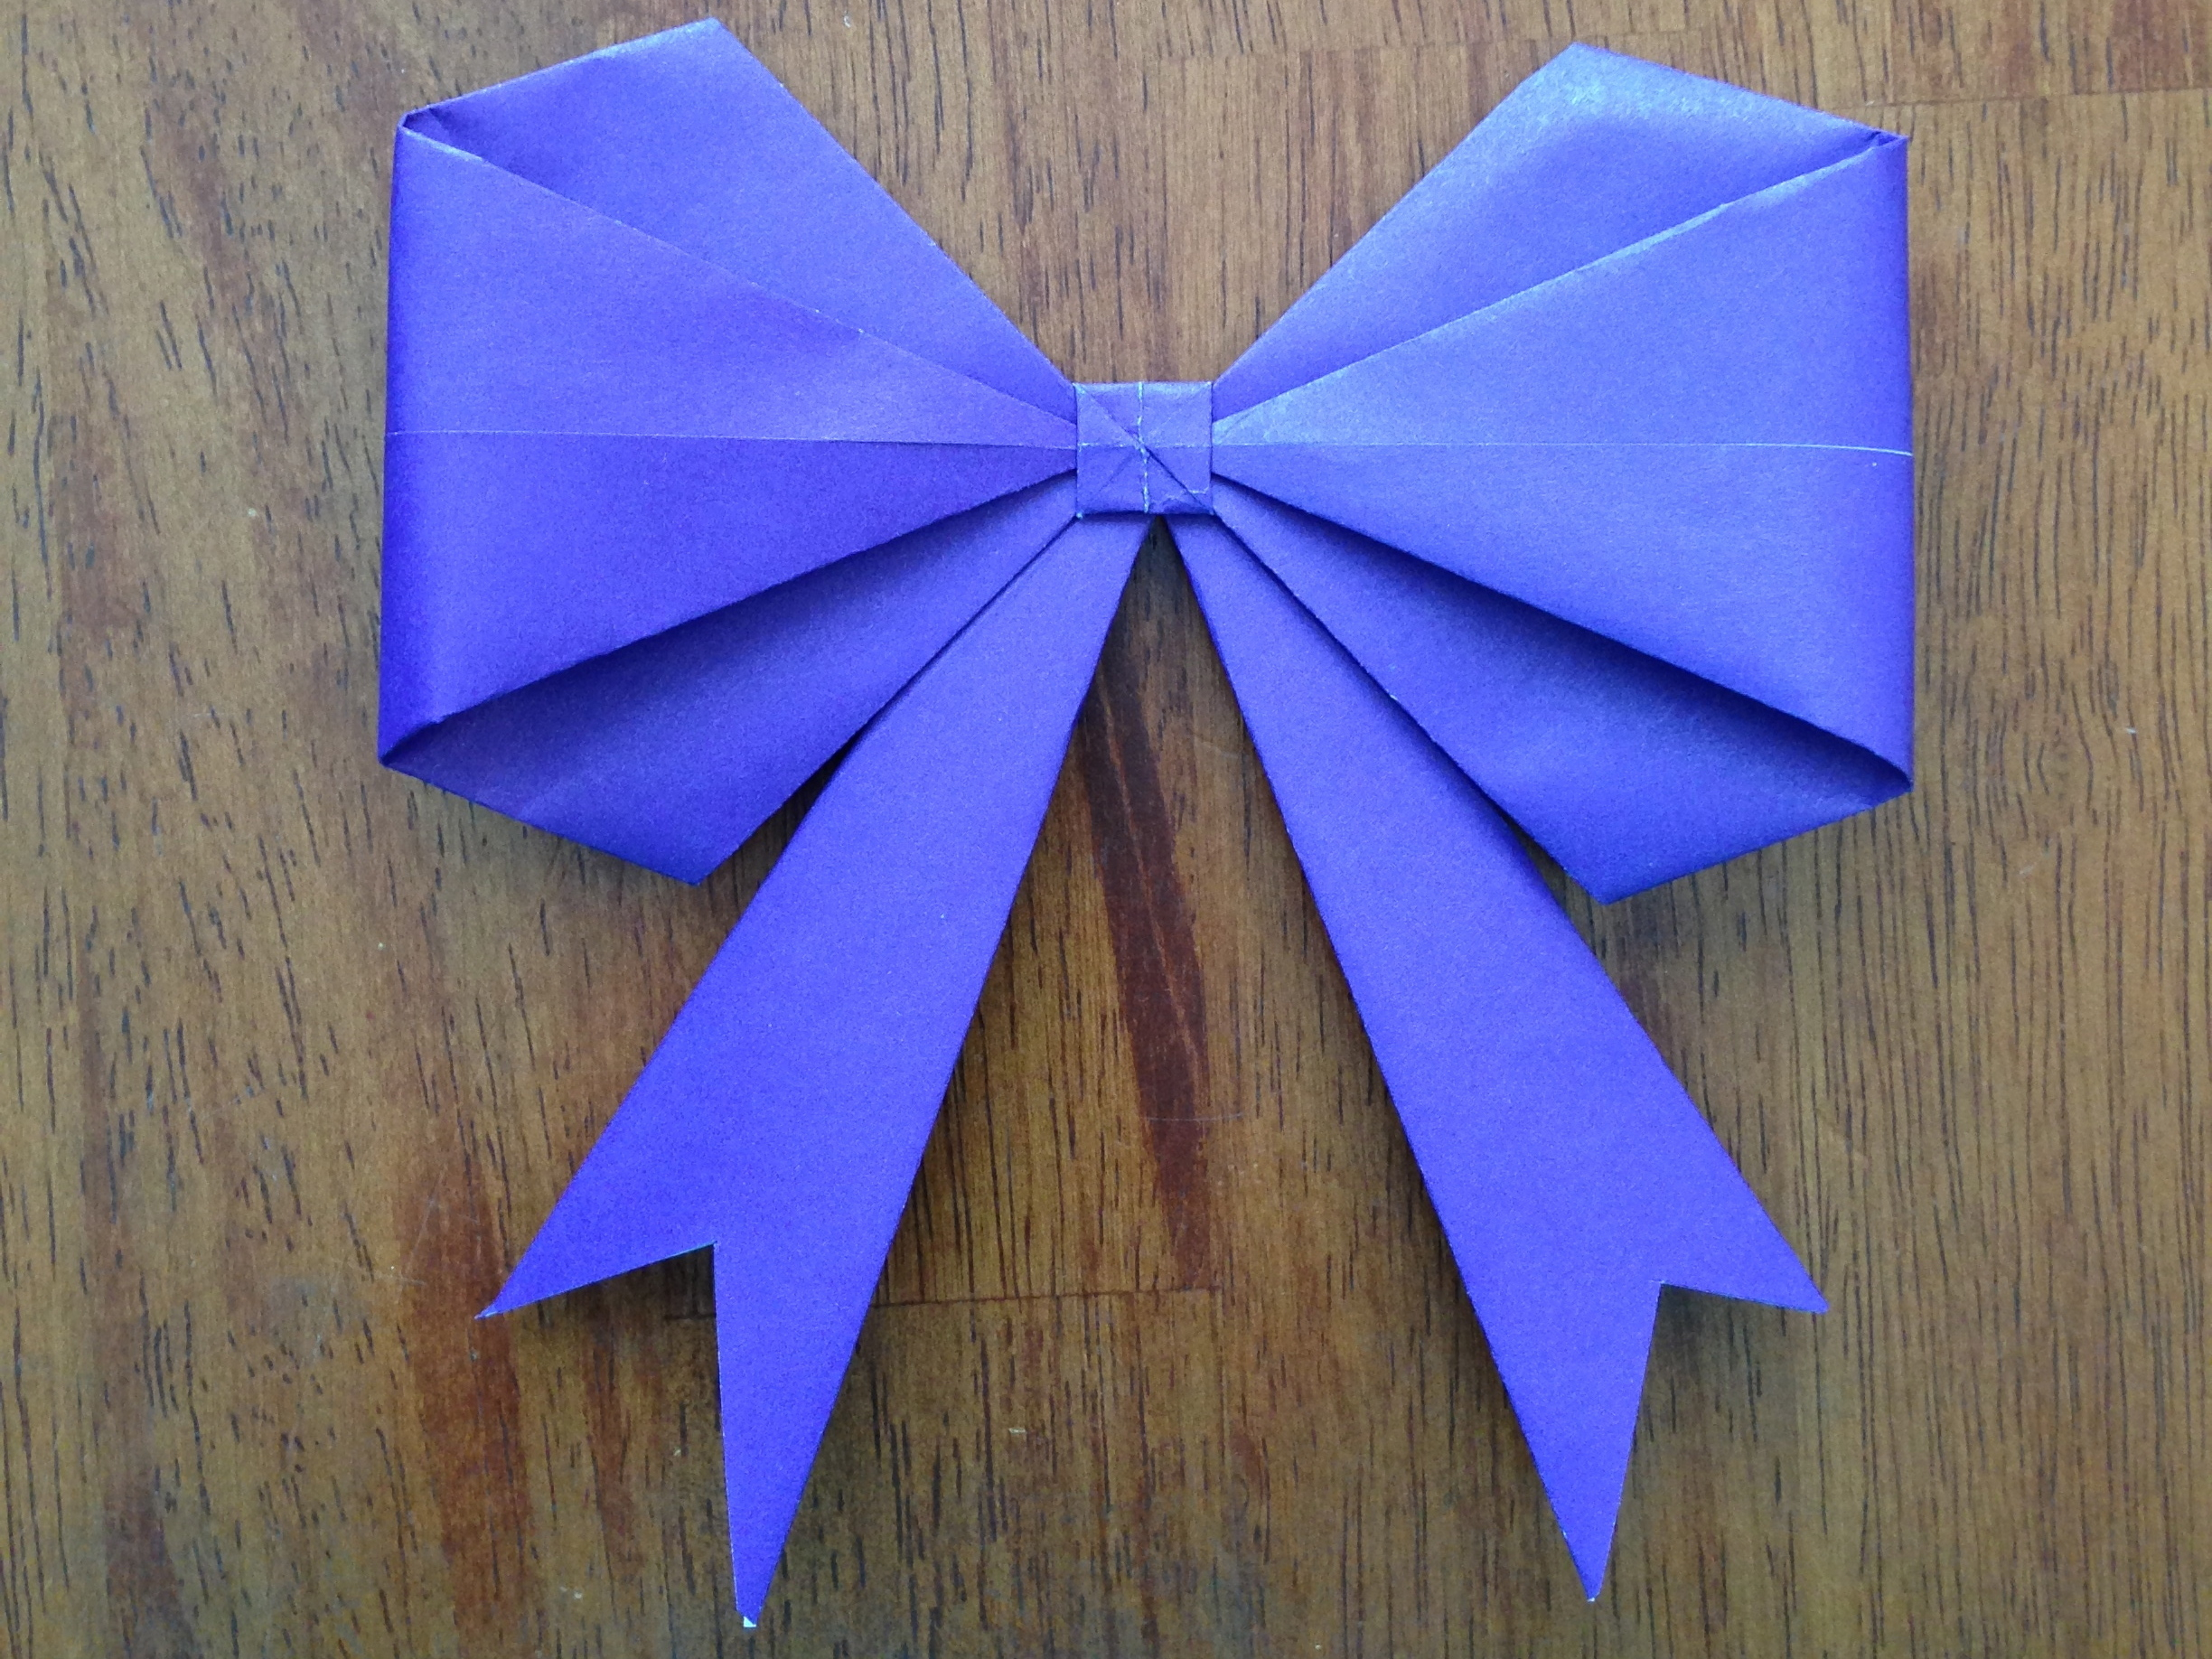 How Do You Make An Origami Origami Bow Make